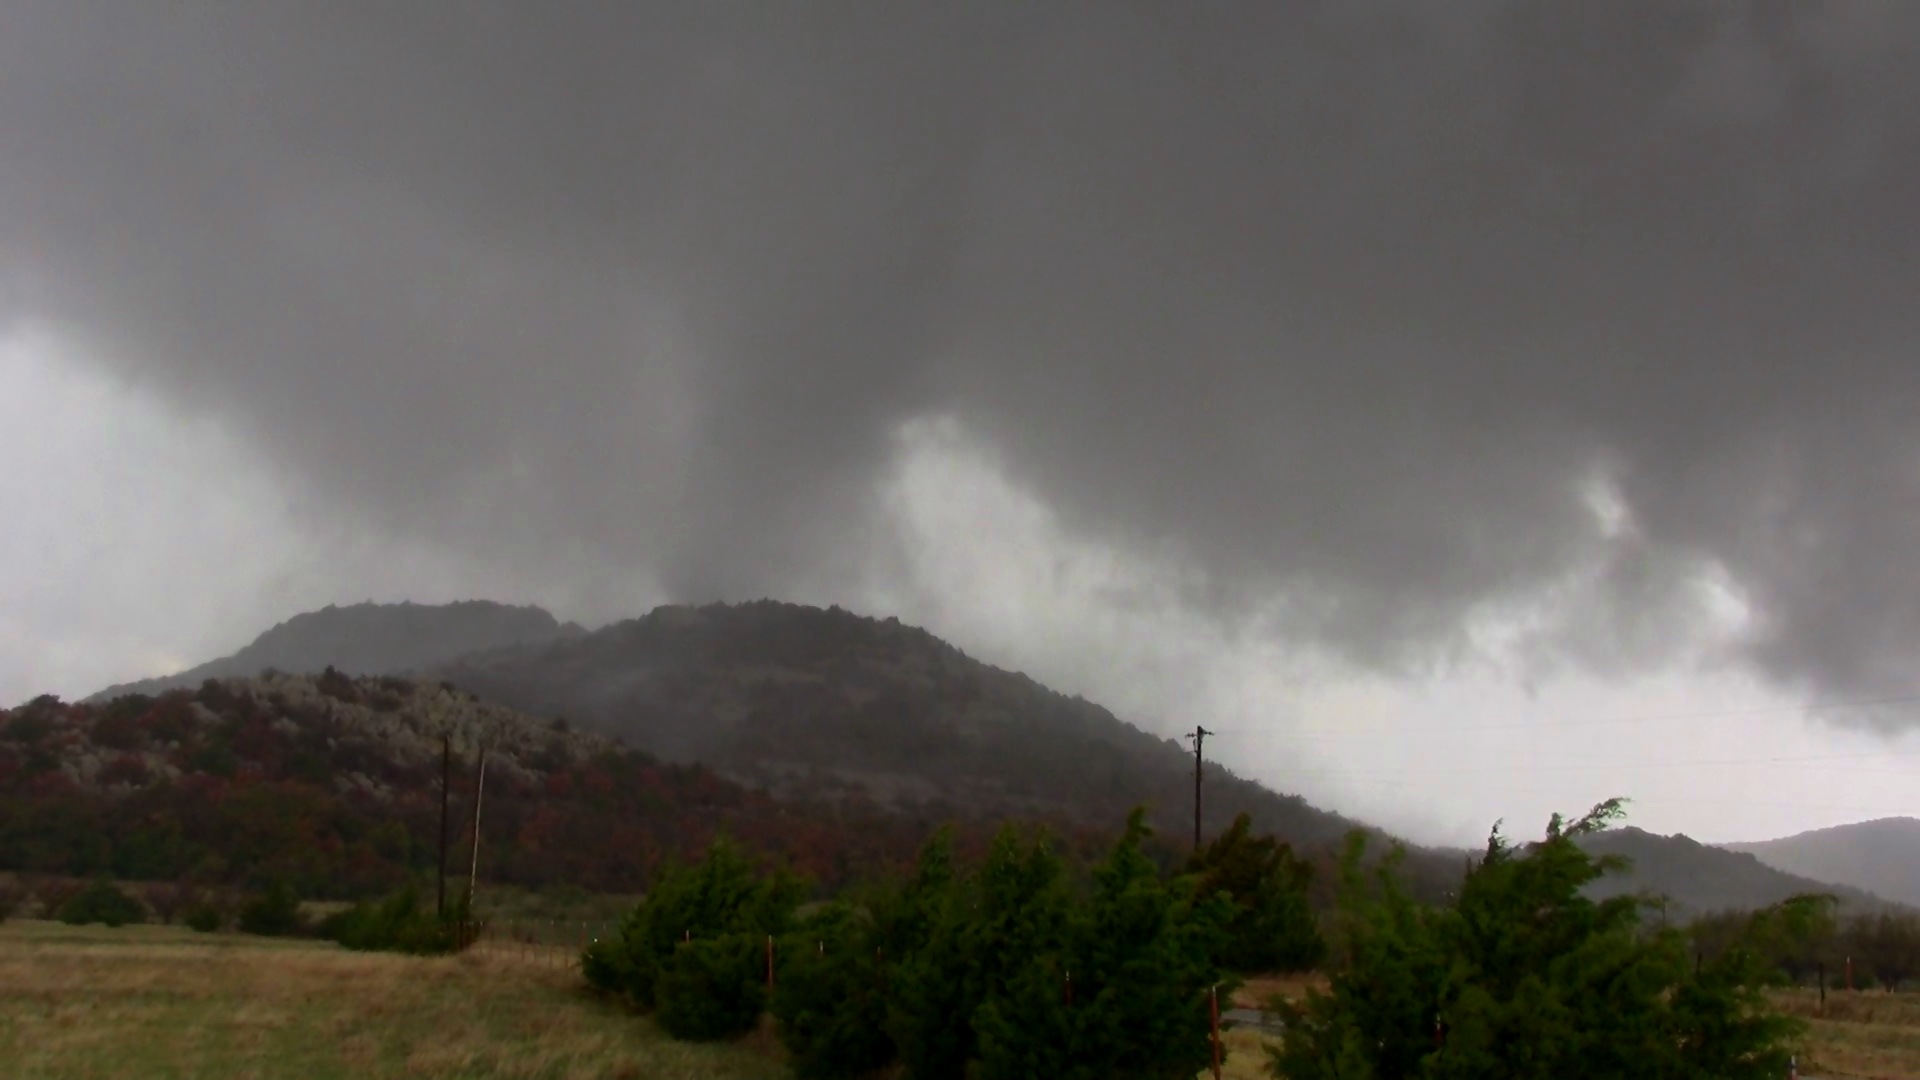 Tornado moves over Saddle Mountain on November 7, 2011